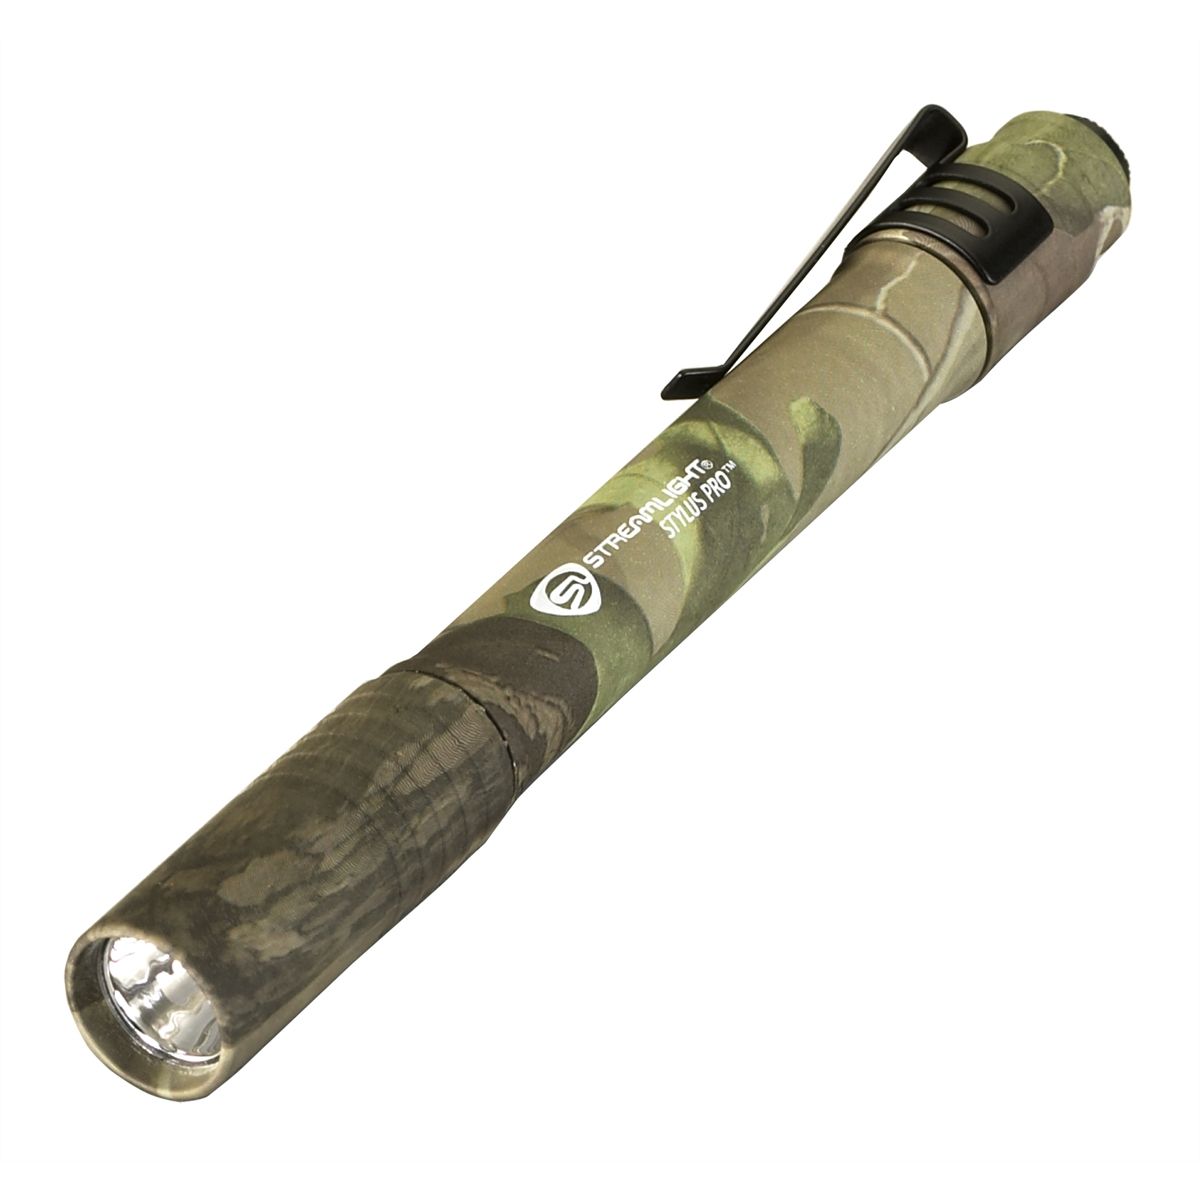 Buckmasters Stylus Pro Penlight with Green LED (Realtree Hardwoo